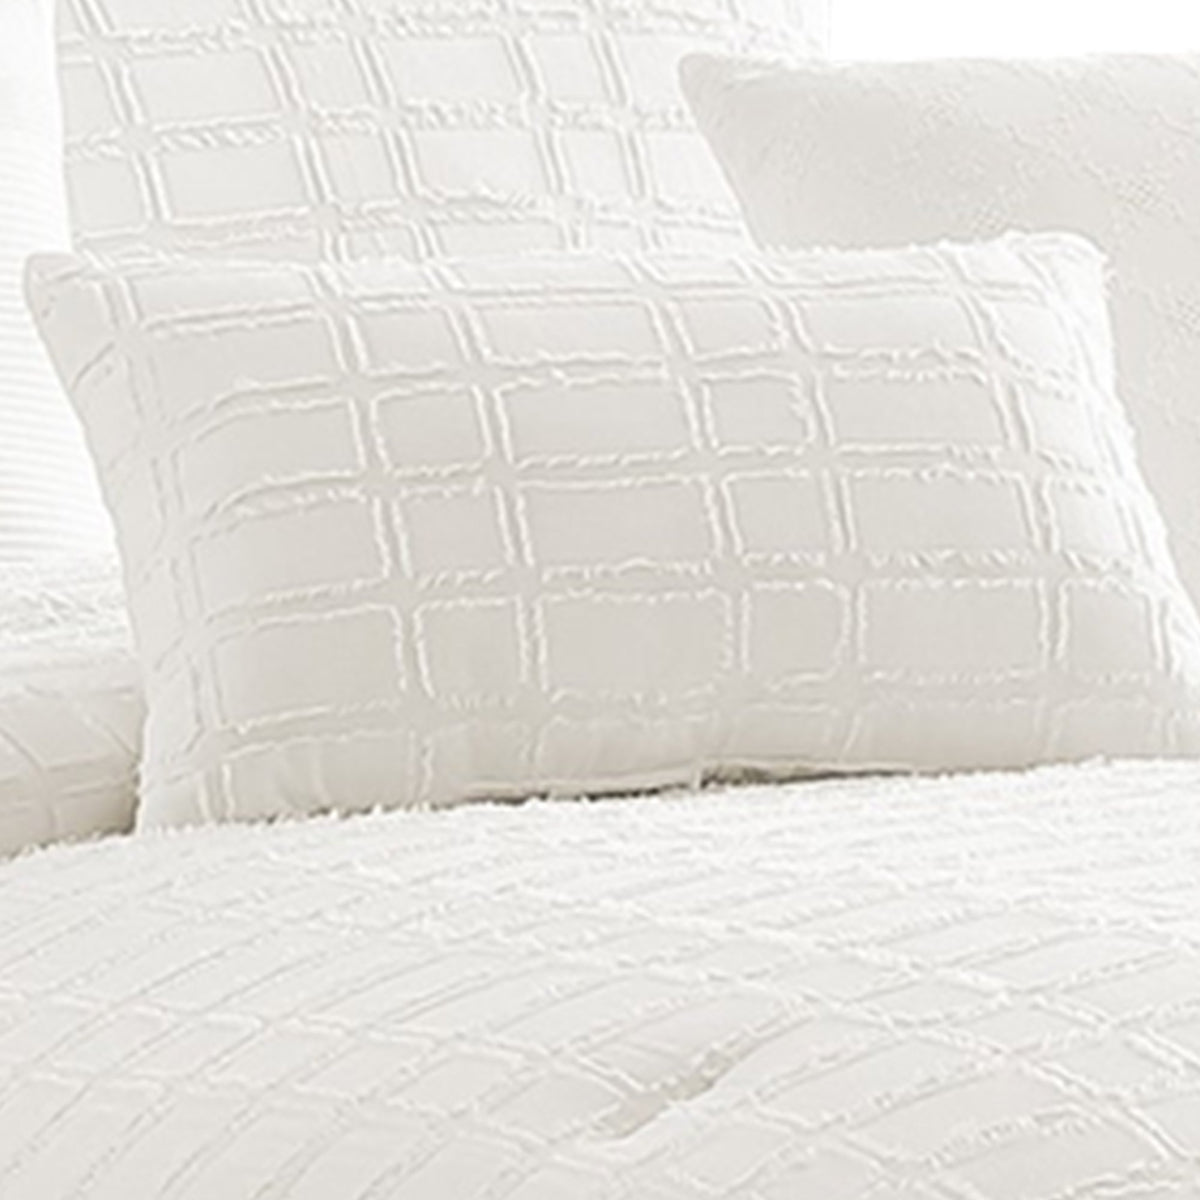 7 Piece Cotton King Comforter Set with Fringe Details, White - BM225177